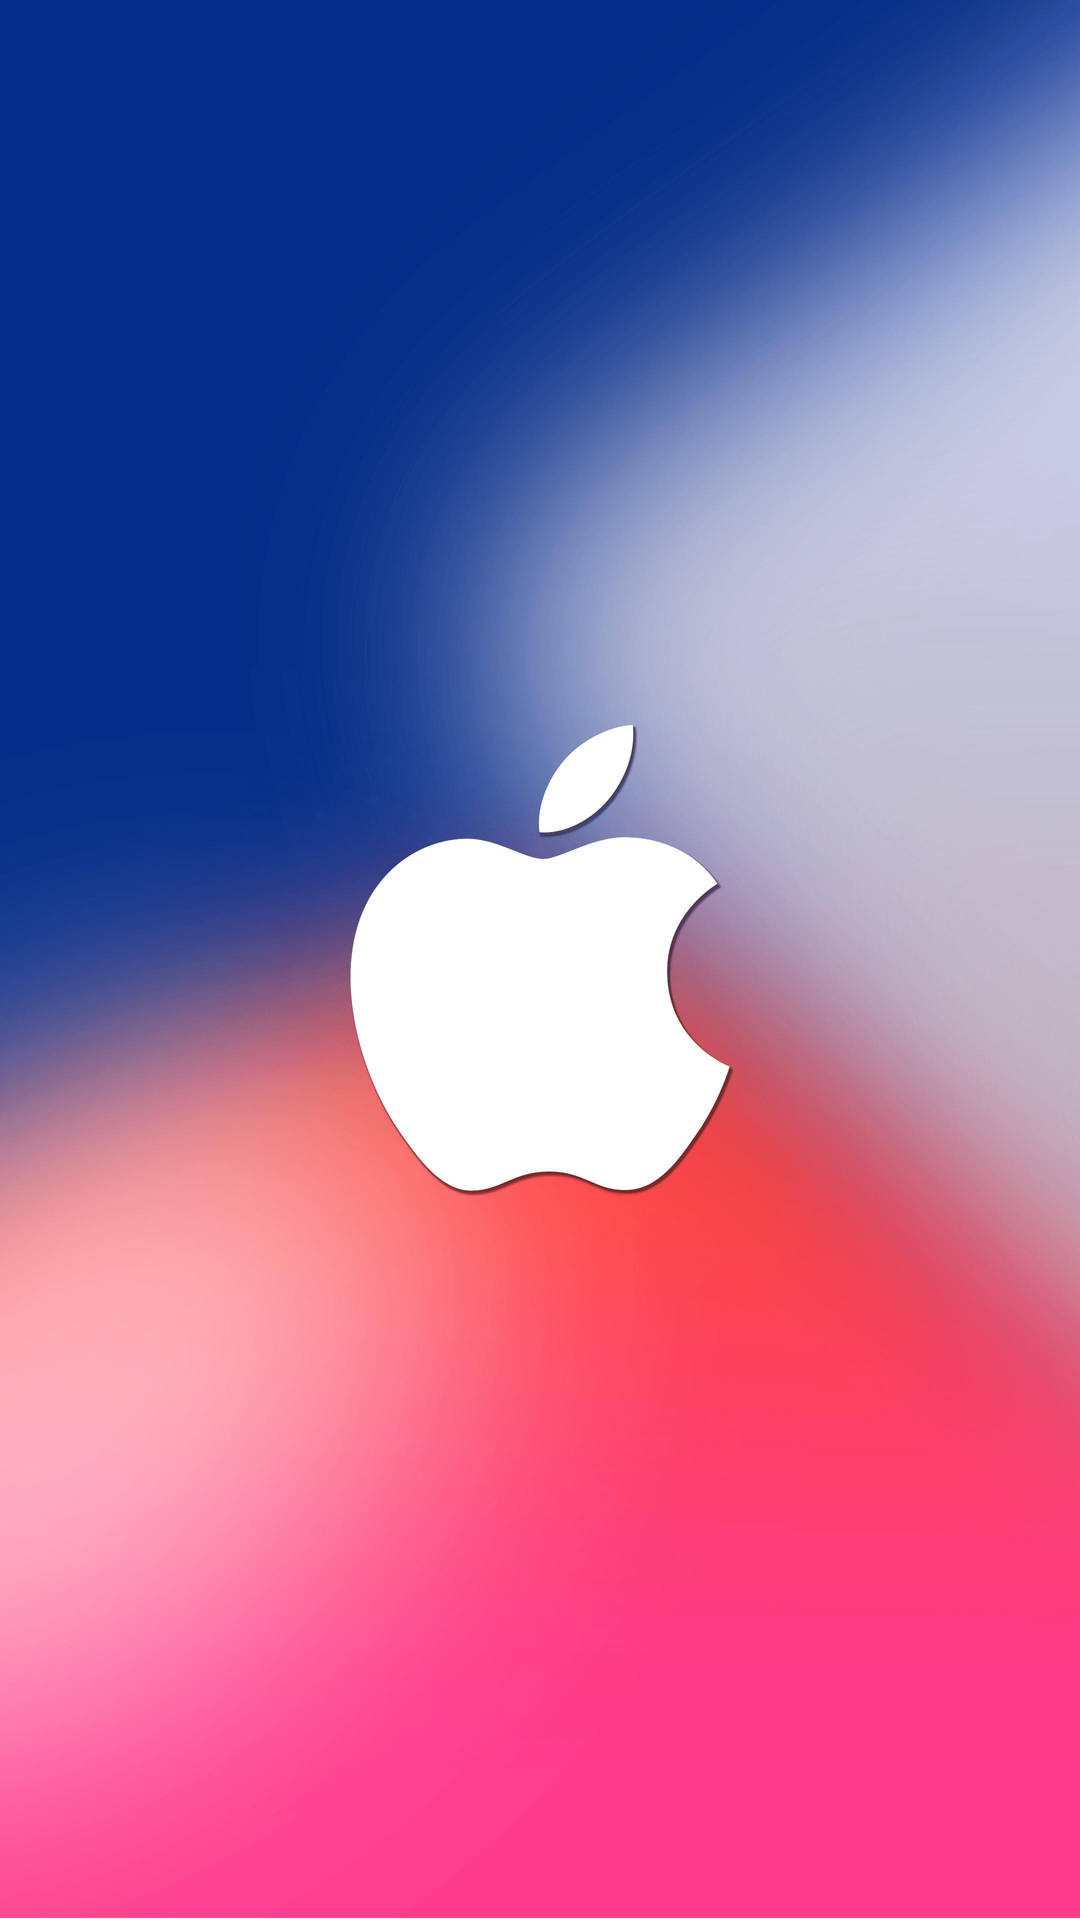 iPhone X Original Apple Logo On Blurred Colors Wallpaper